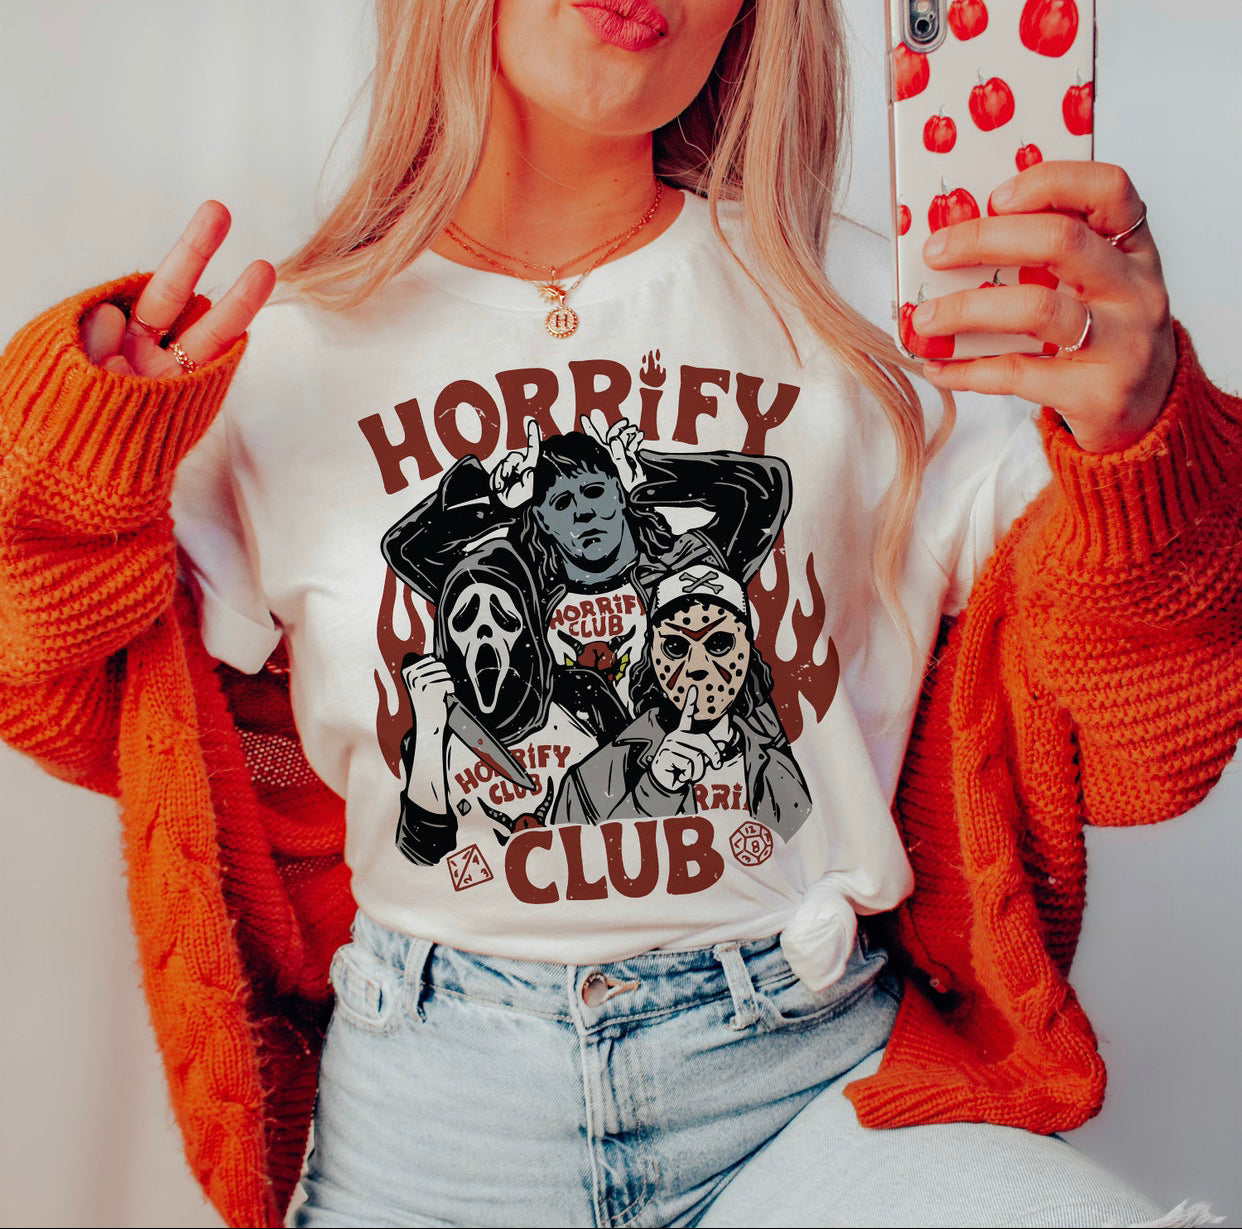 Horrify Club